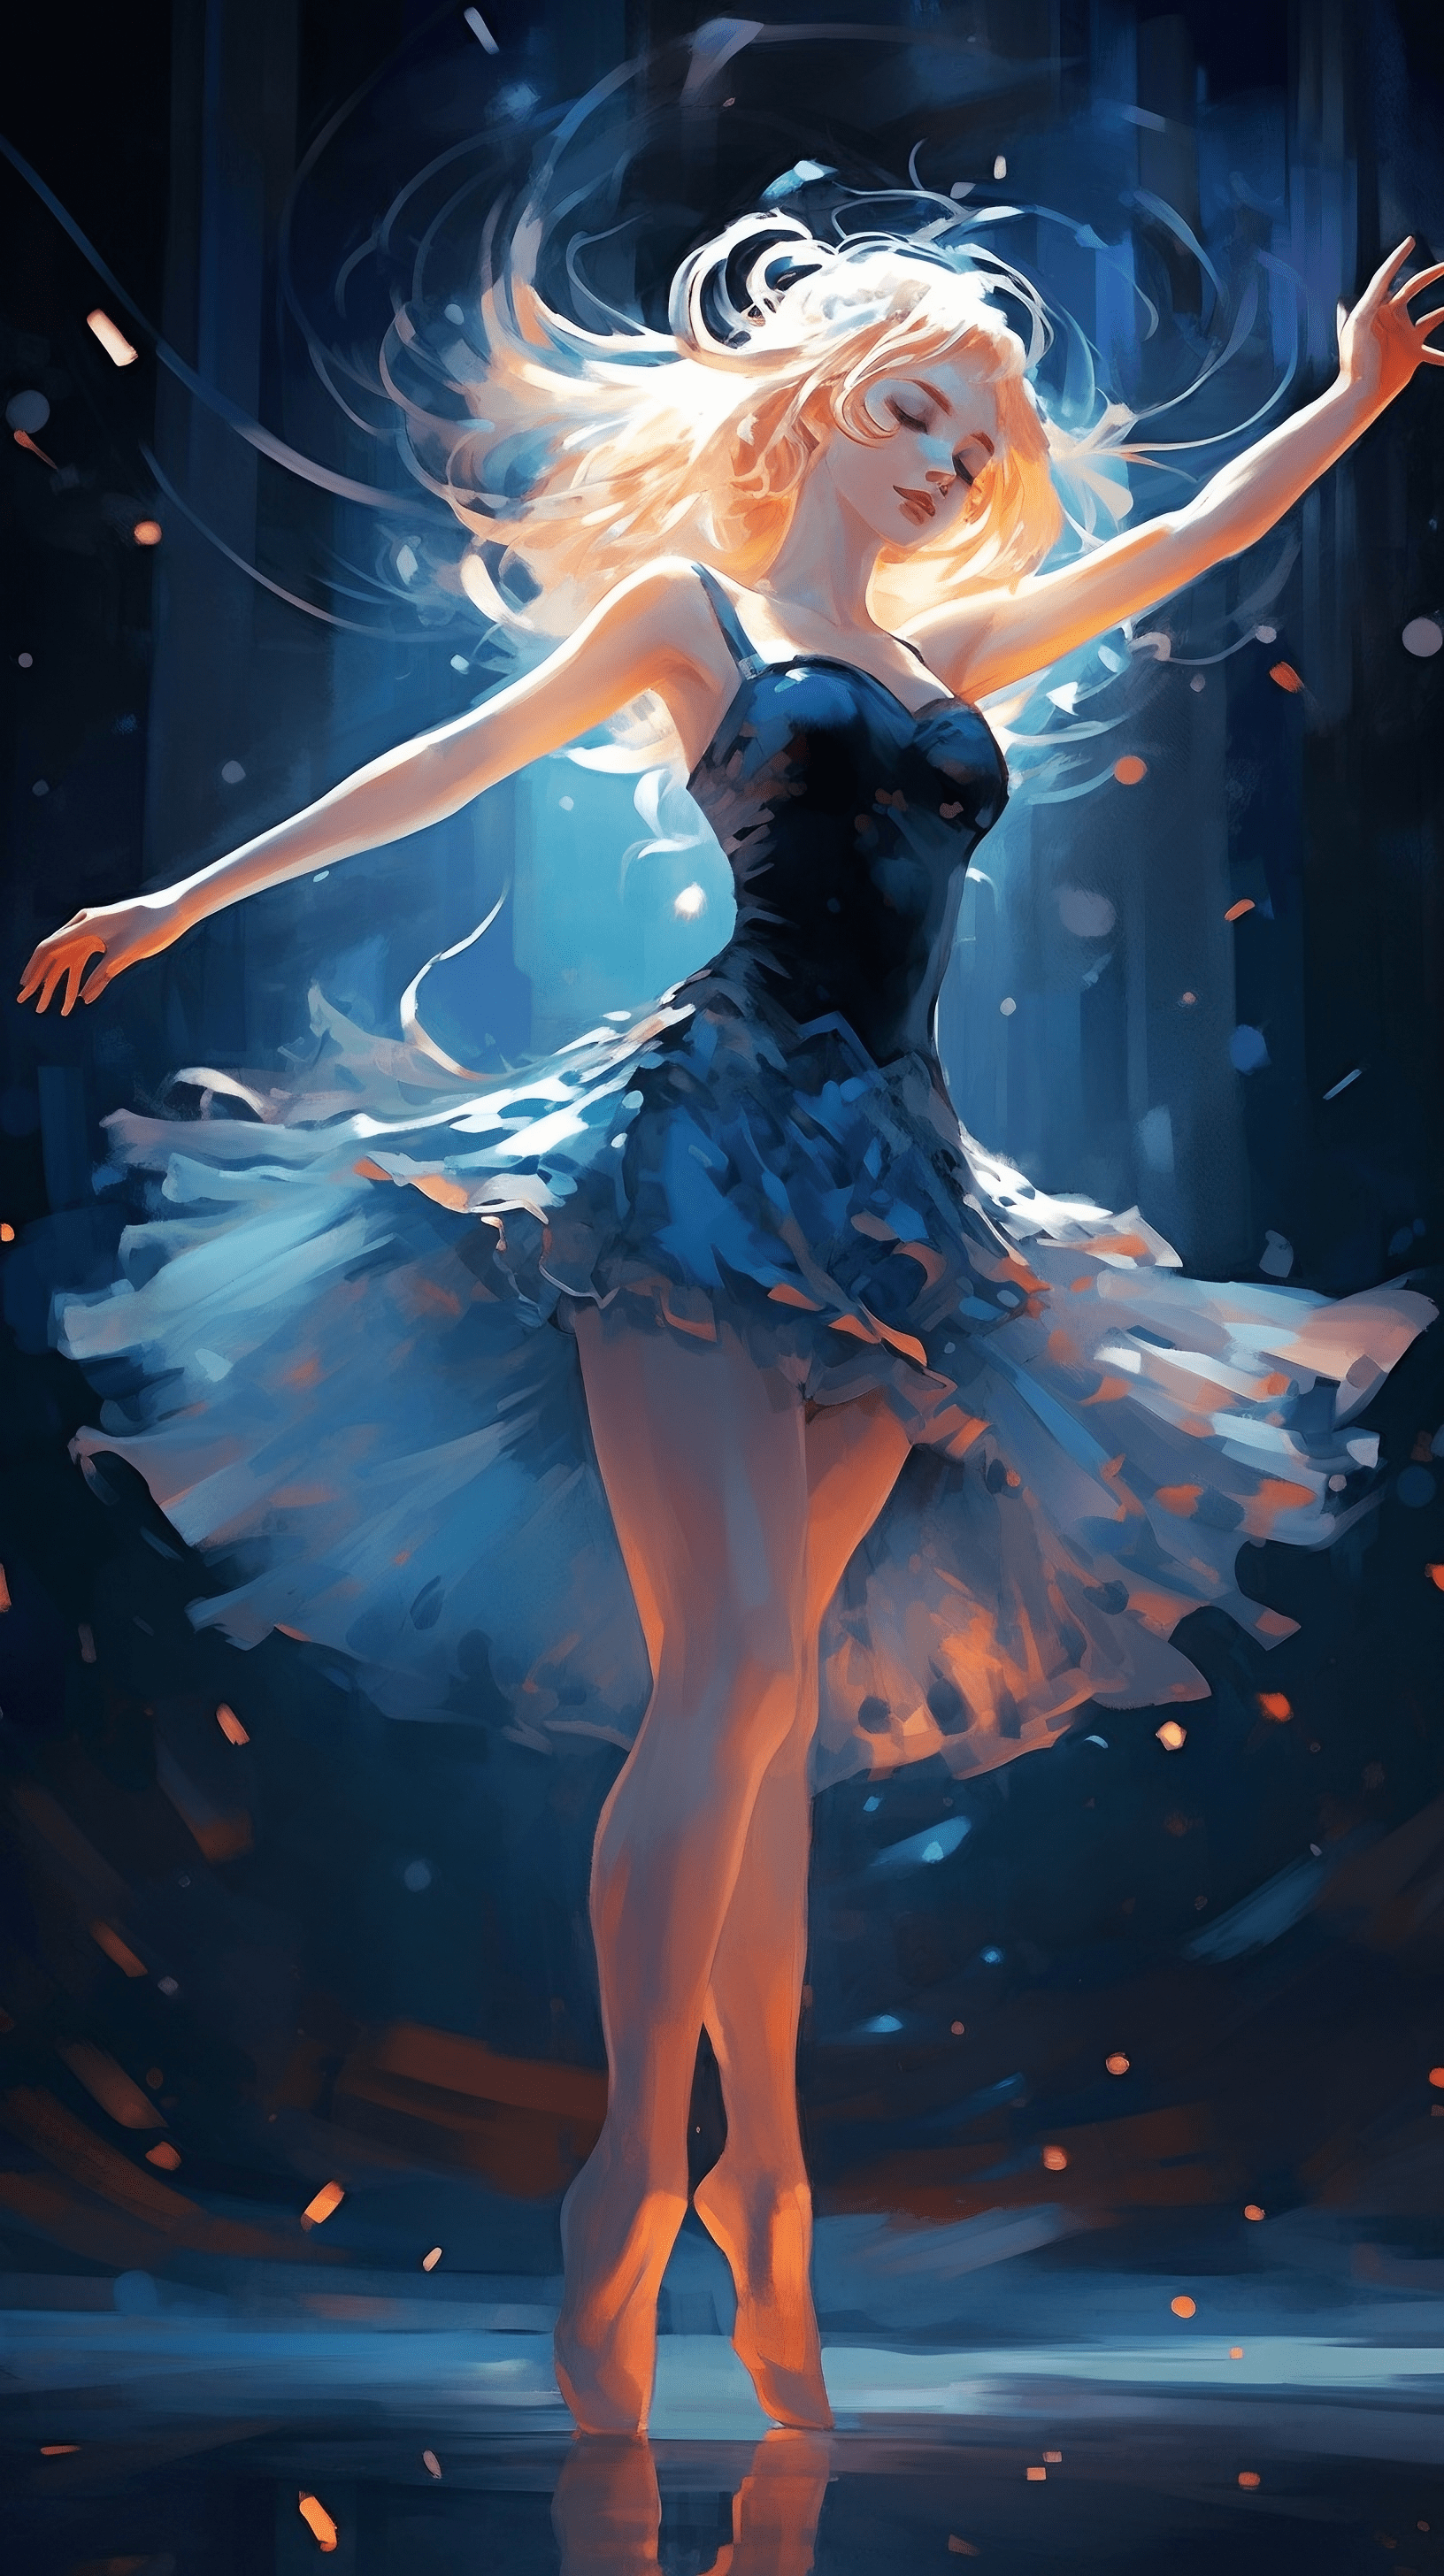 A beautiful anime ballet dancer in a black dress dances in the rain. - Anime, ballet, phone, blue, dance, blue anime